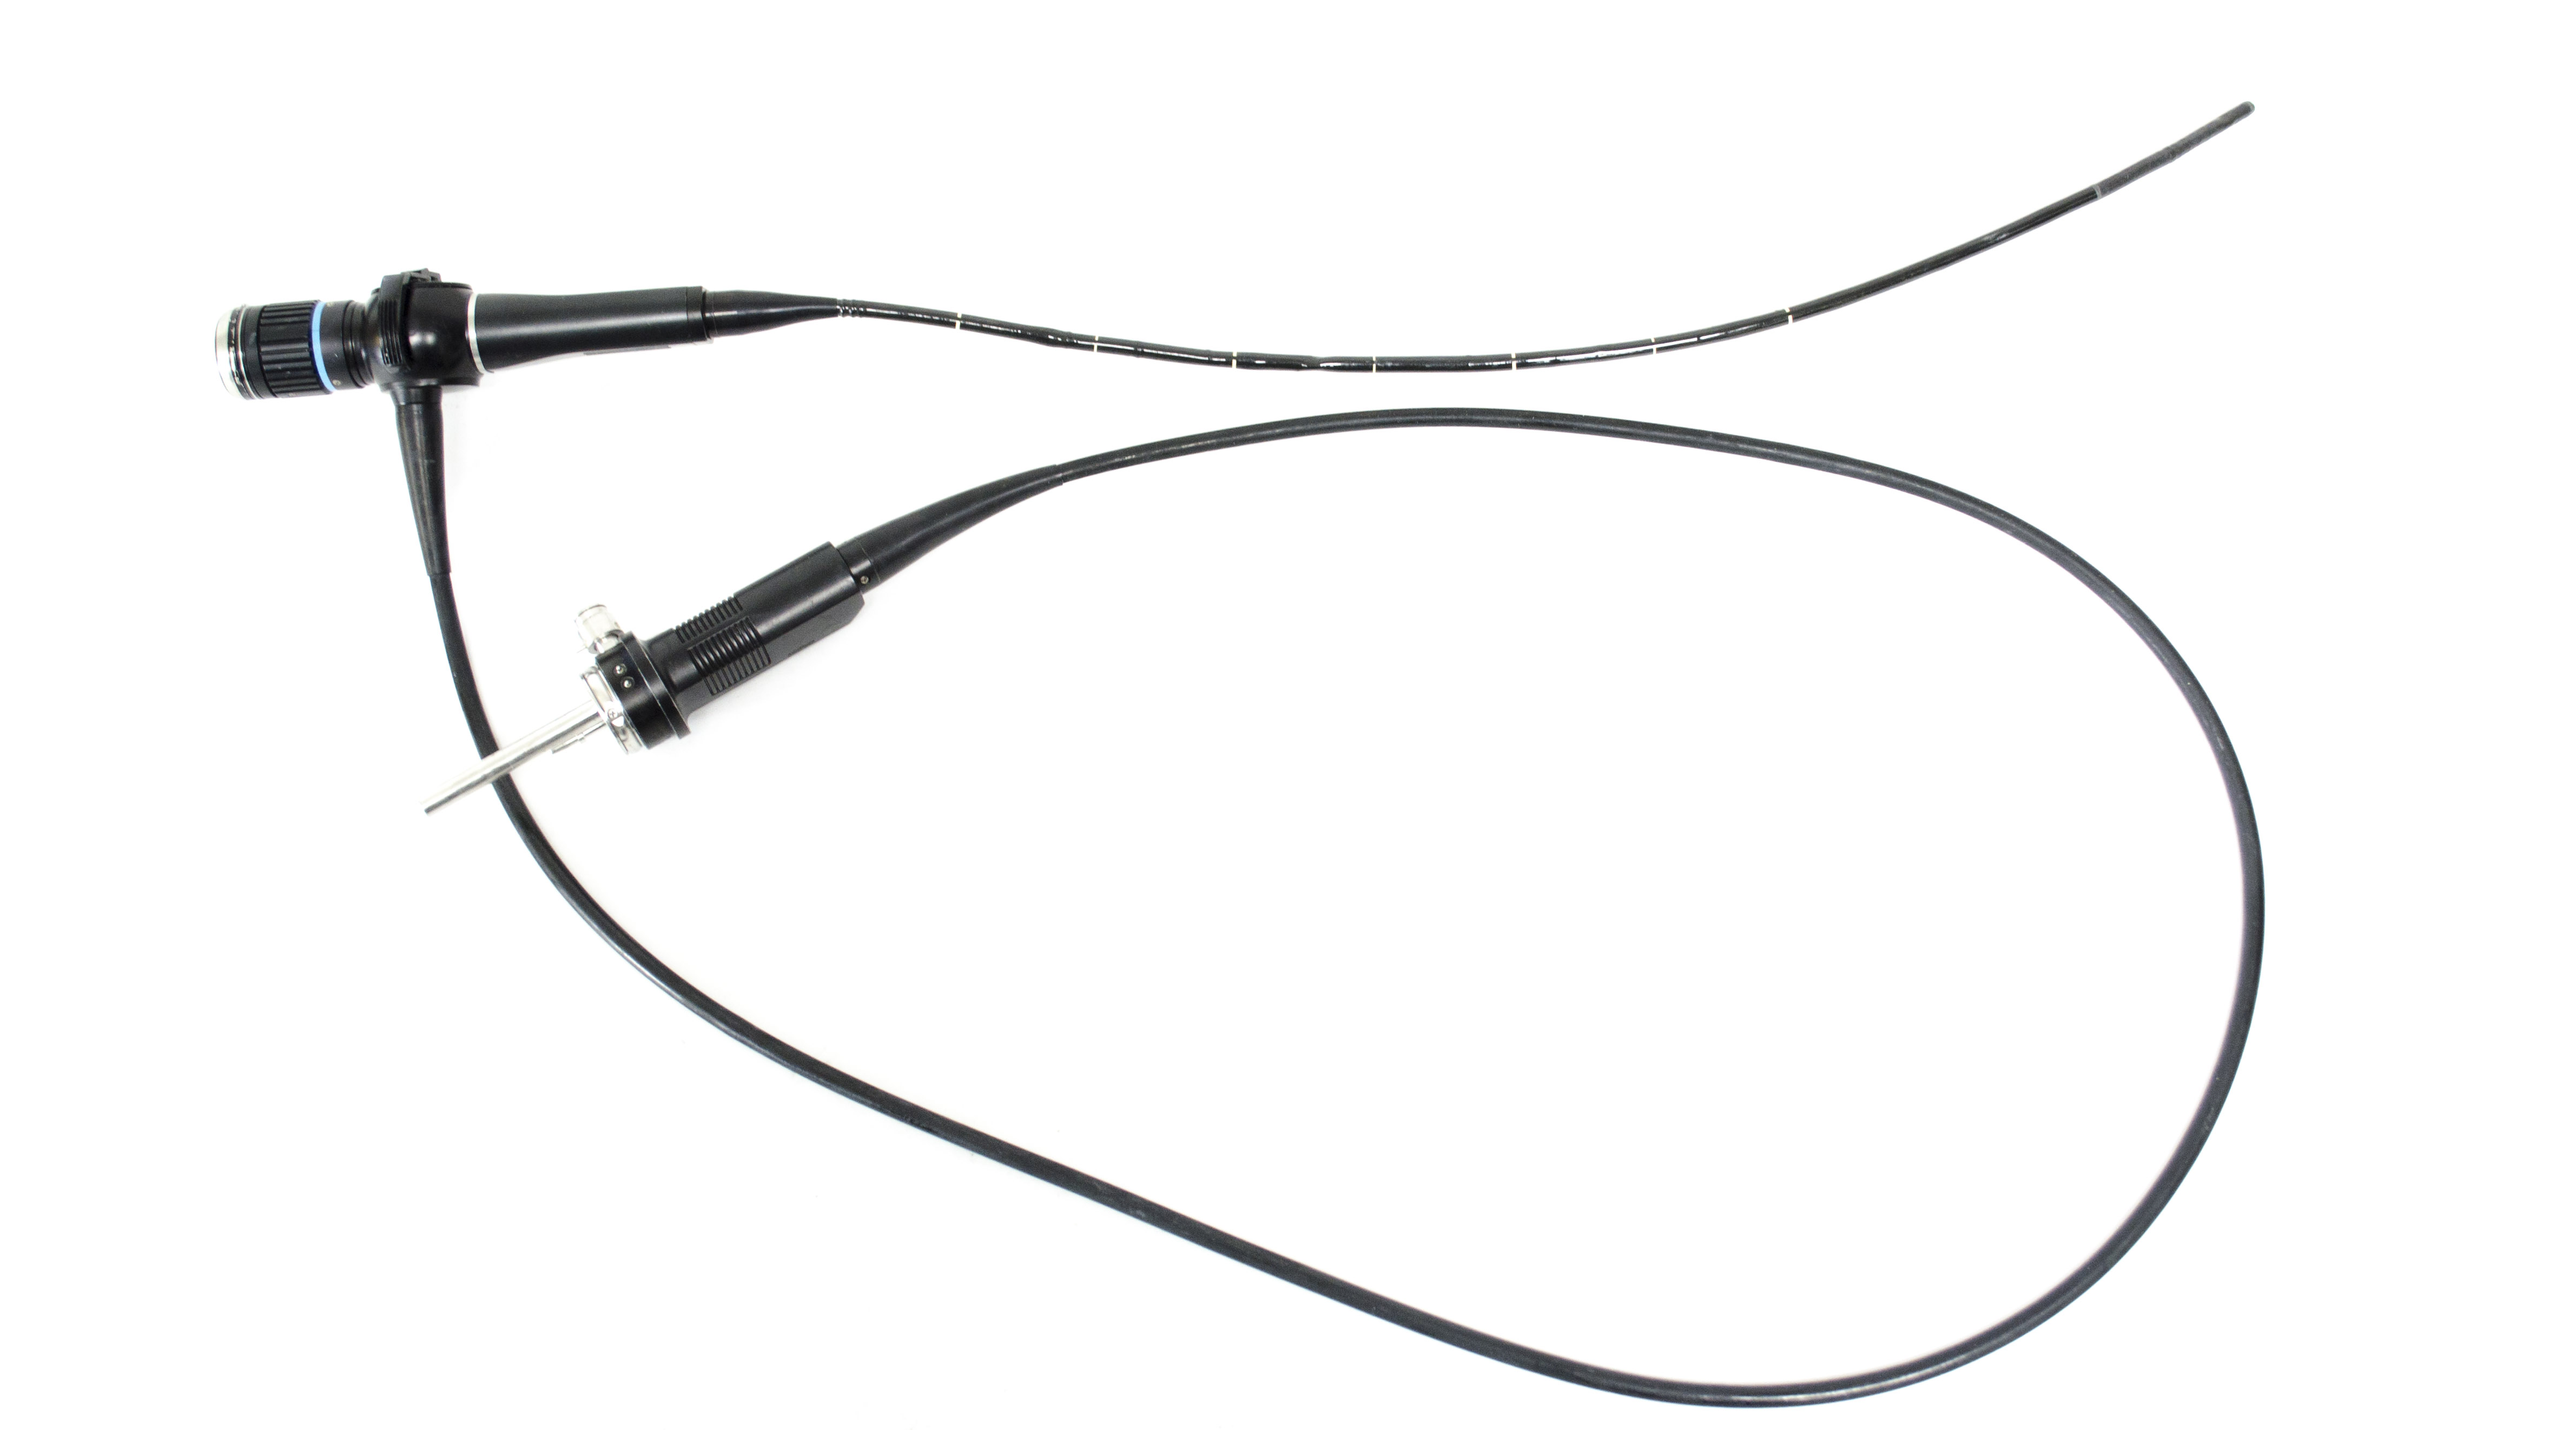 Olympus BF-10 Bronchoscope Flexible Fiber Endoscope (Chip Value)